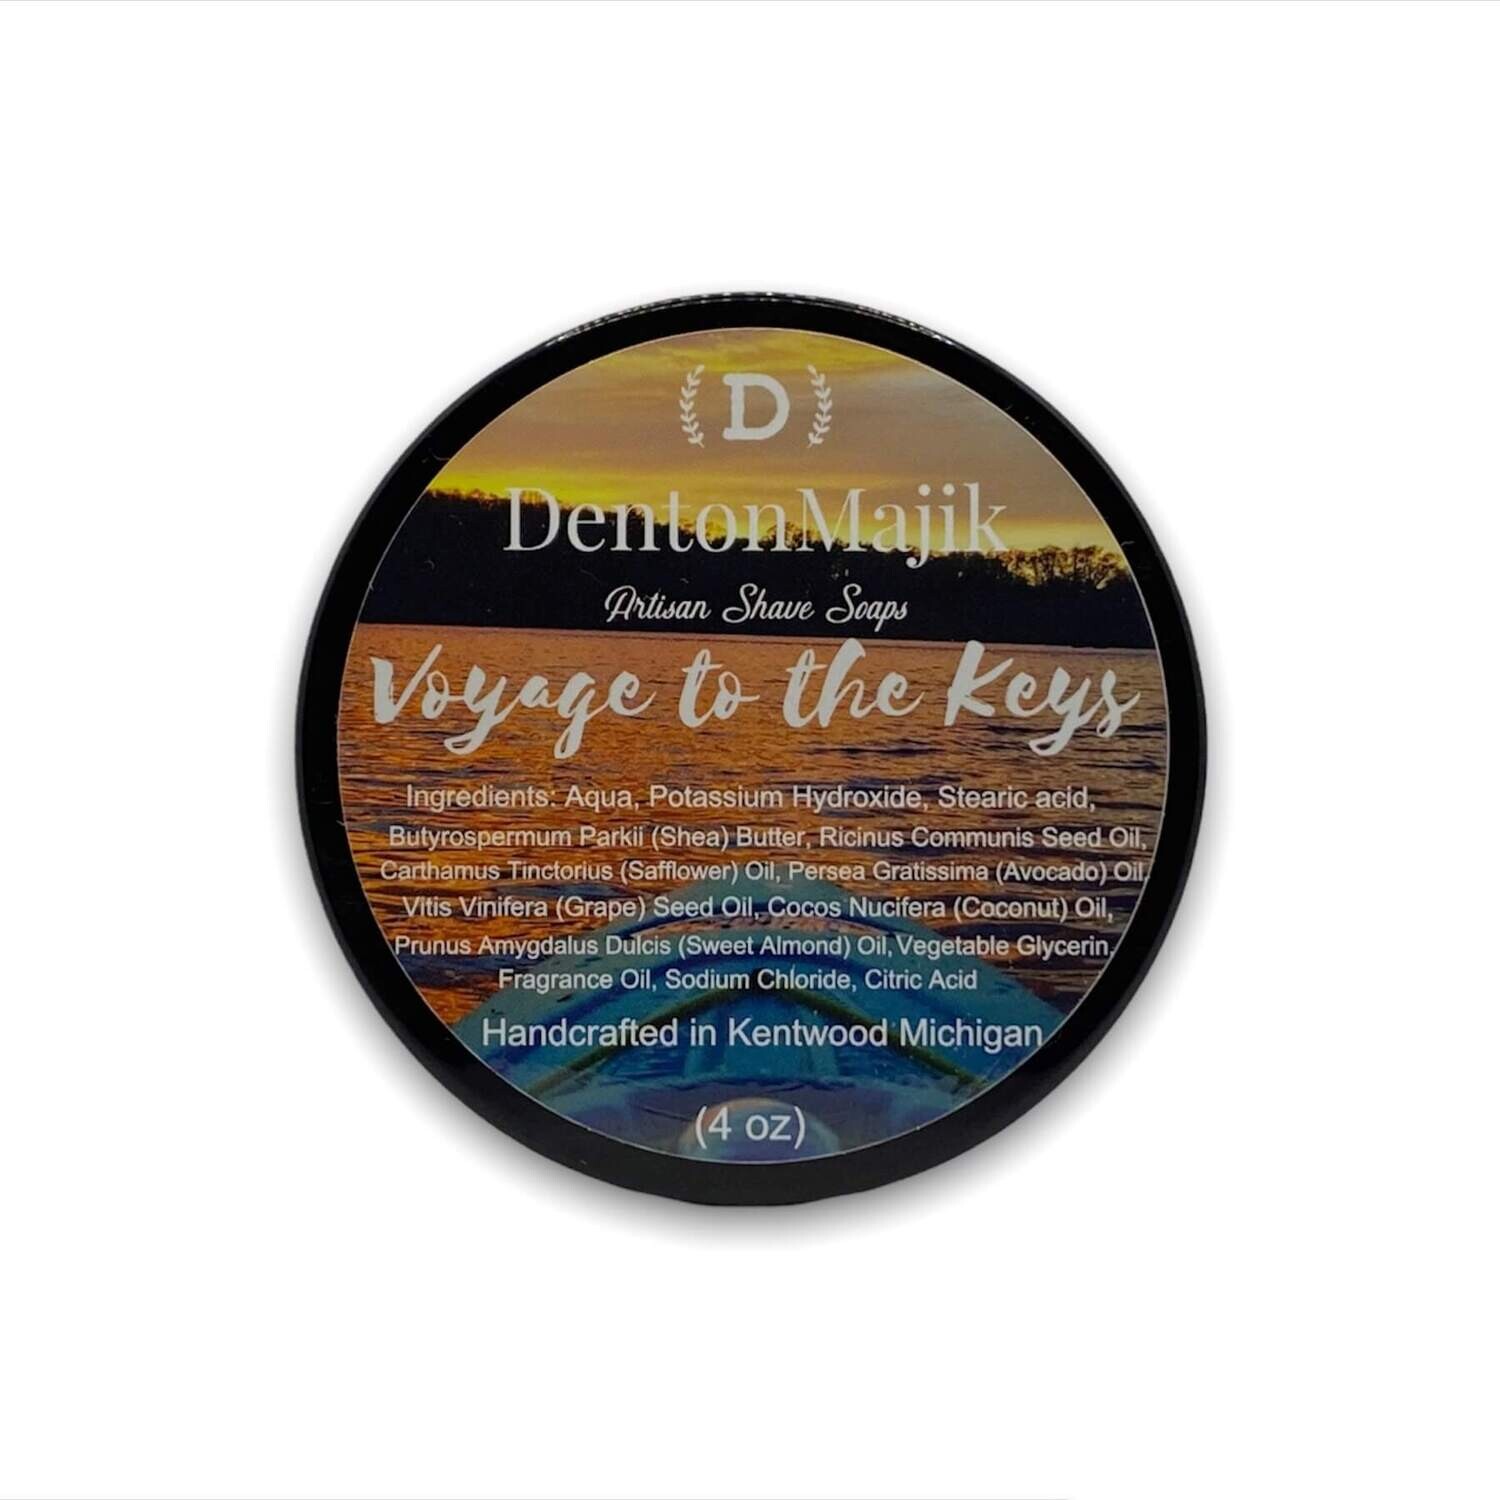 Denton Majik Voyage to the Keys Artisan Shave Soap